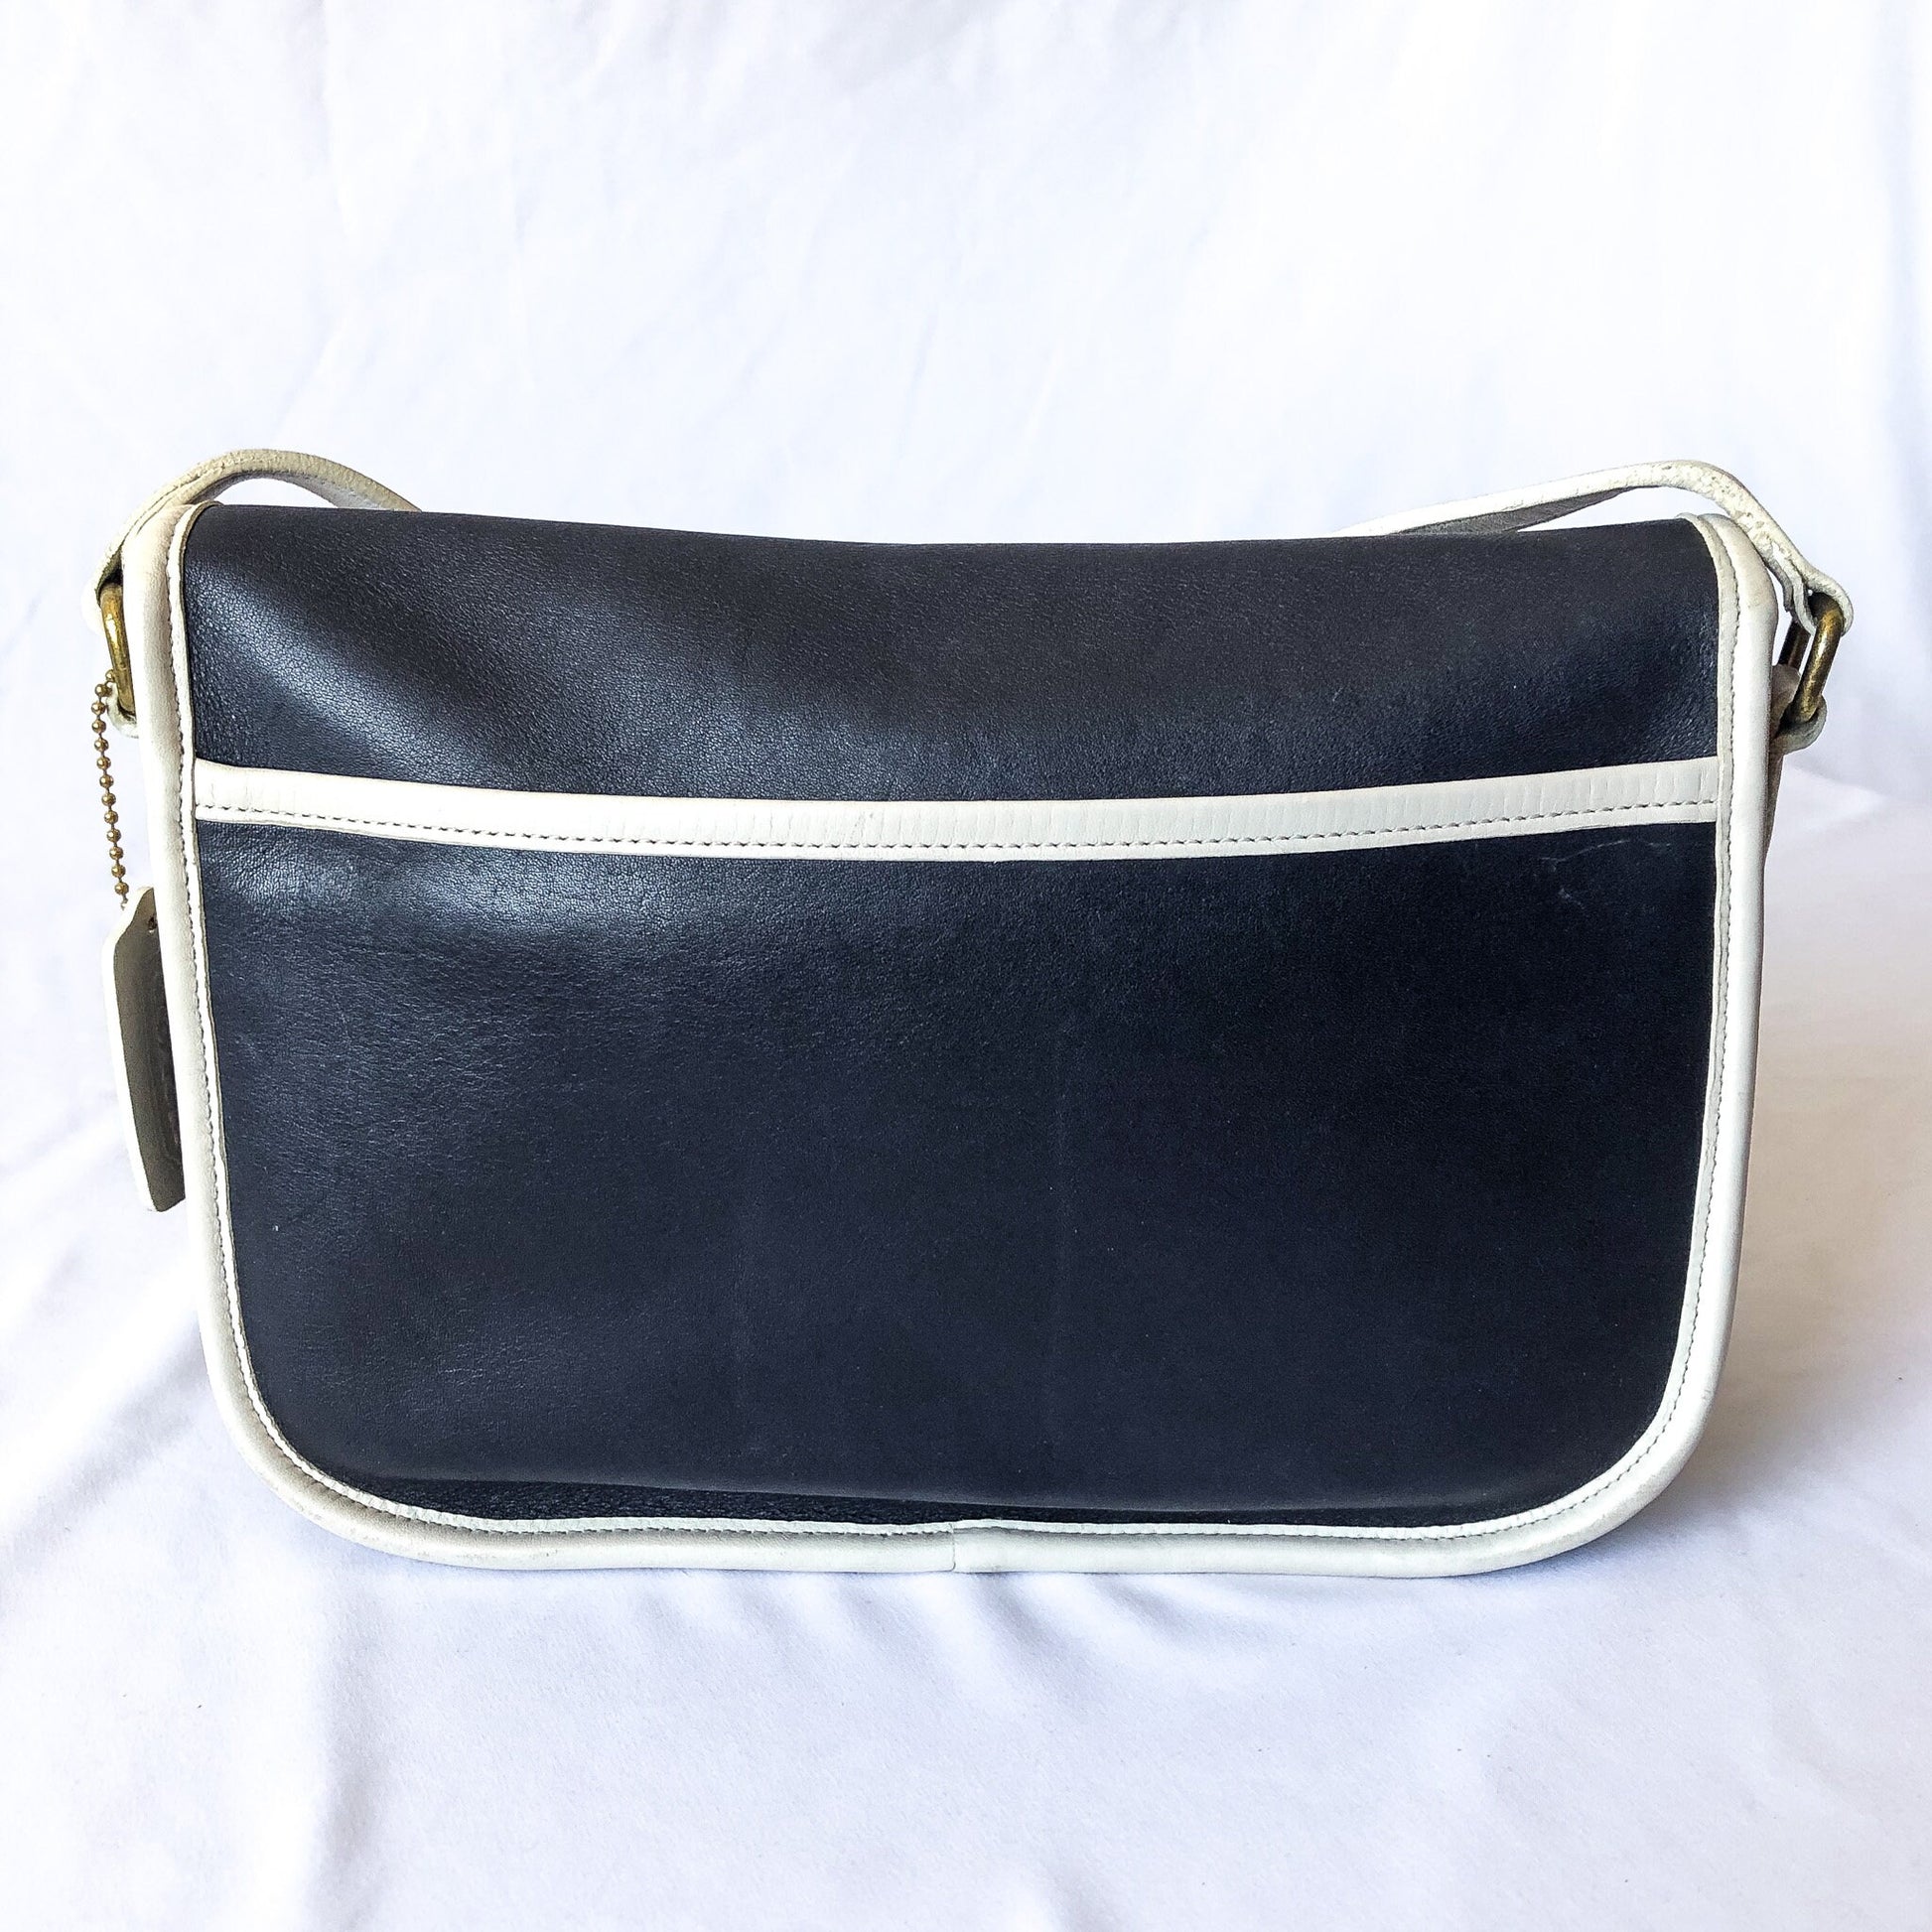 Vintage COACH Spectator Navy and Bone/Off-White Leather Crossbody, Style #9667, Vintage 90s Coach Handbag